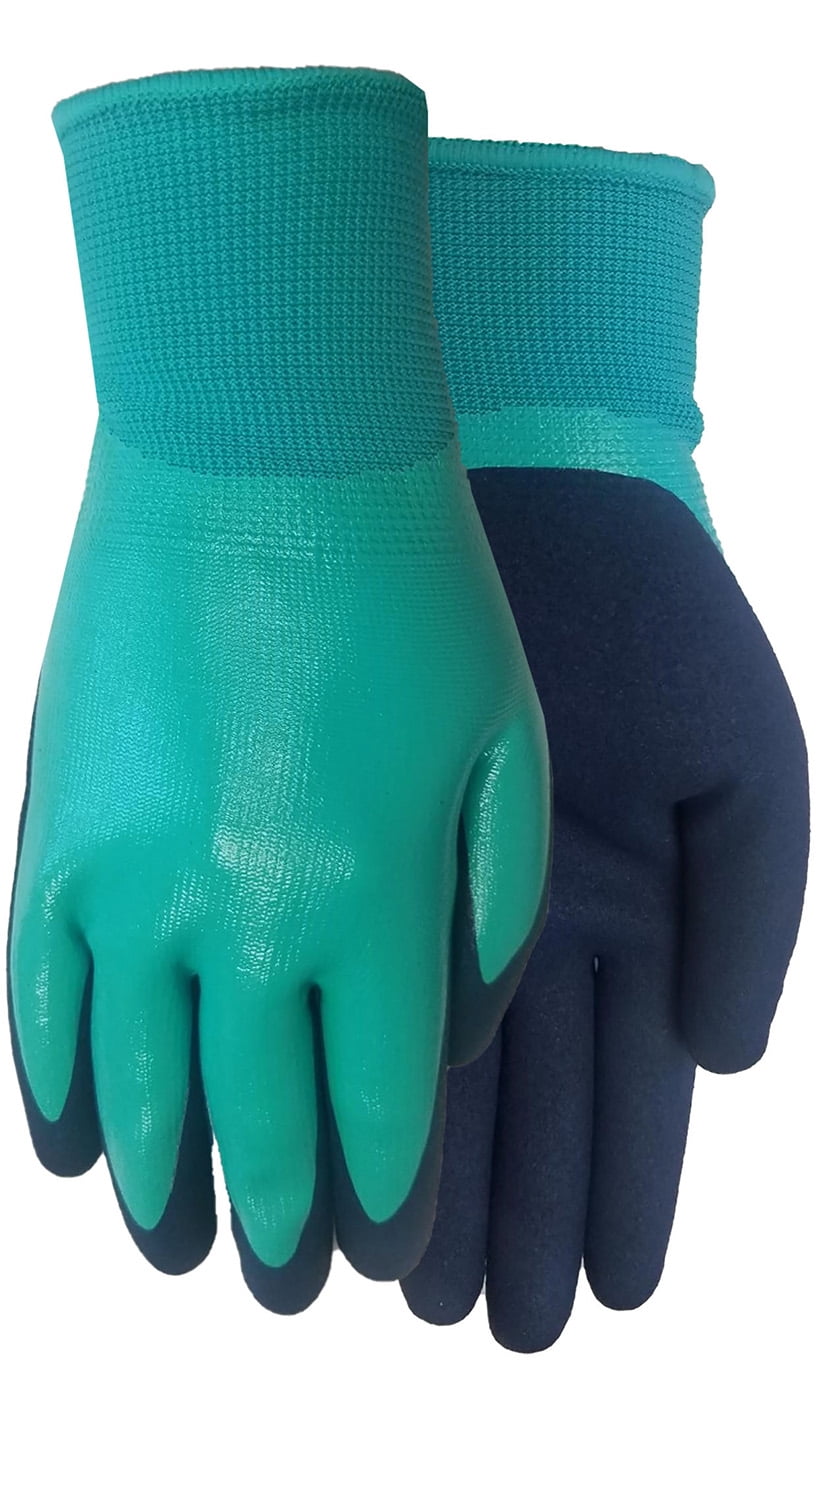 Expert Gardener Ladies Teal Water Resistant Gripping Glove, Size Medium